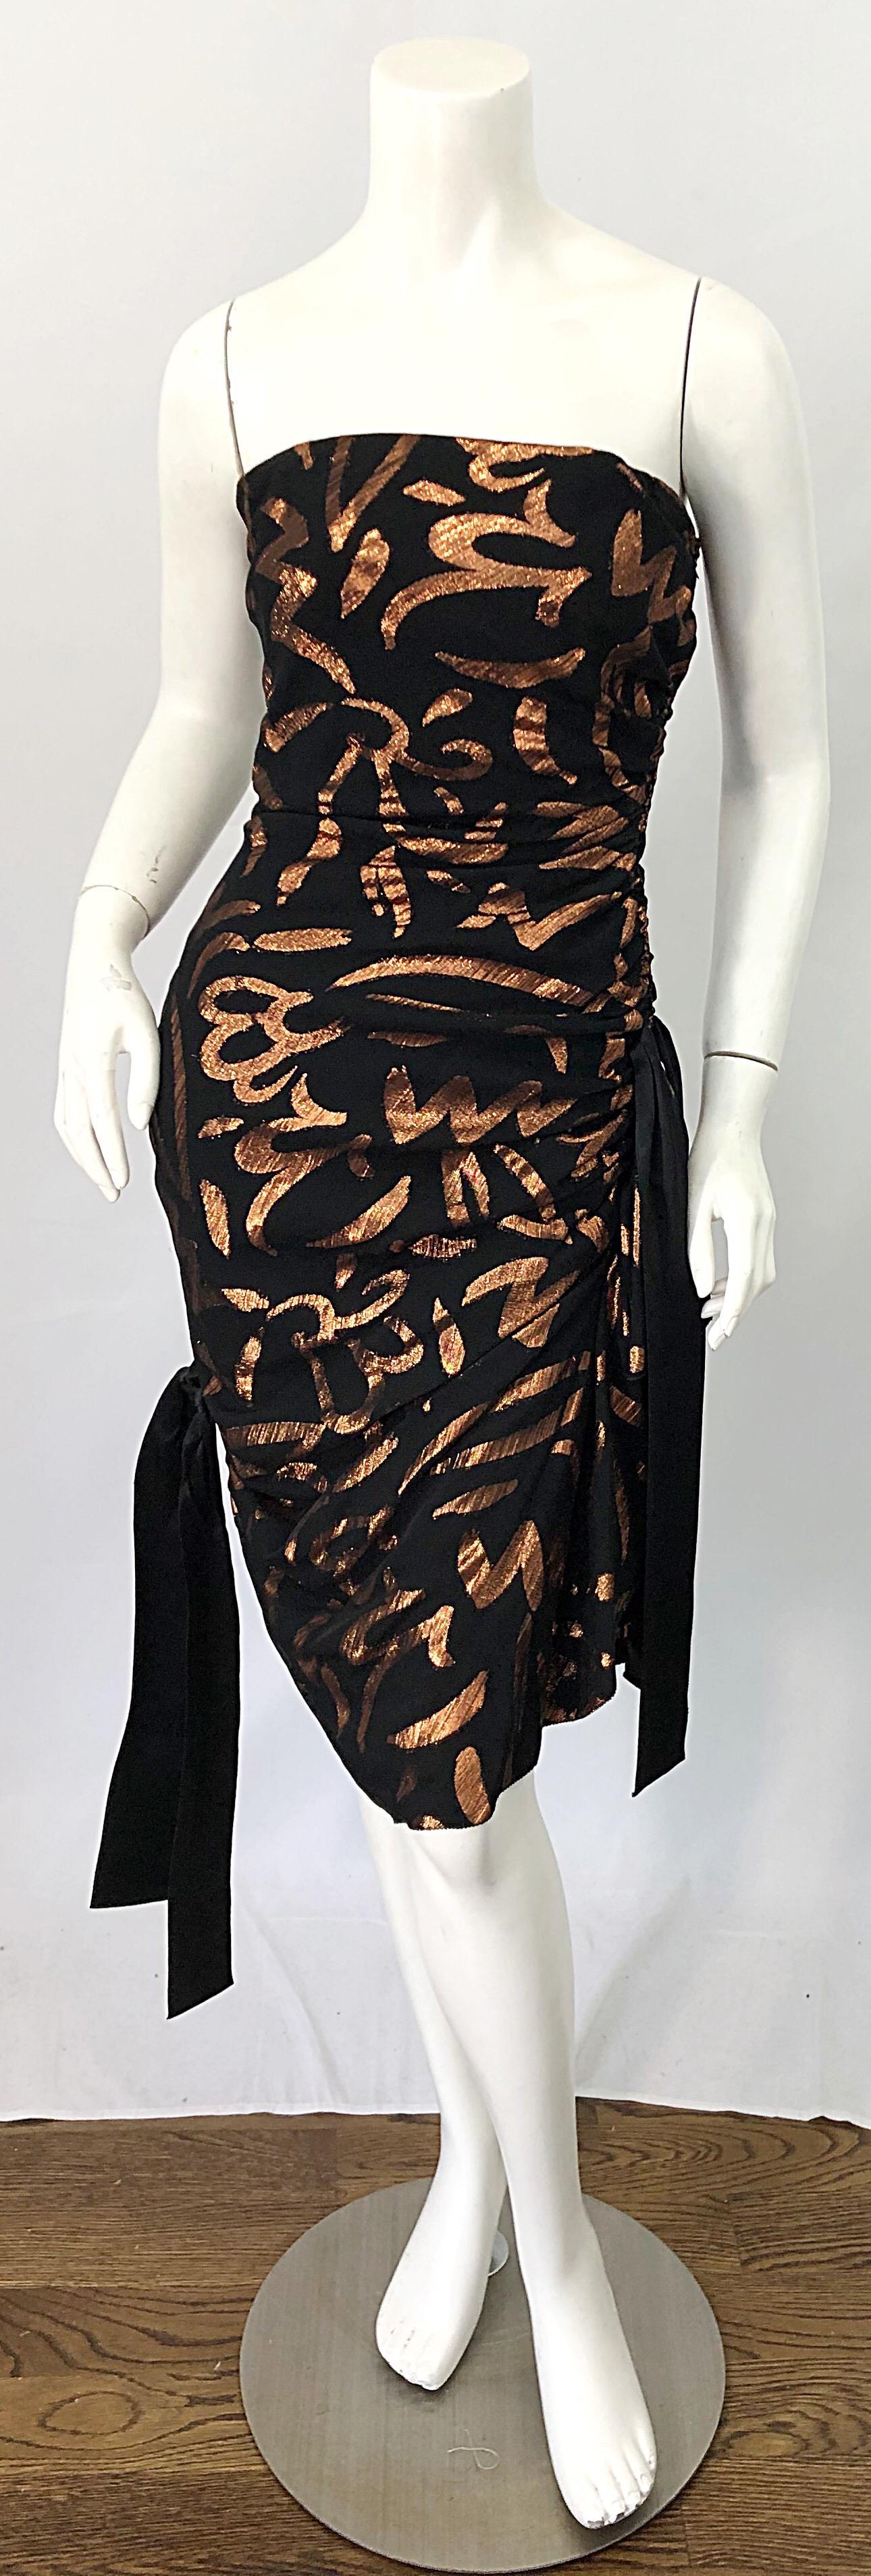 1980s Tarquin Ebker Black + Bronze Silk Chiffon Batik Print Strapless 80s Dress For Sale 7